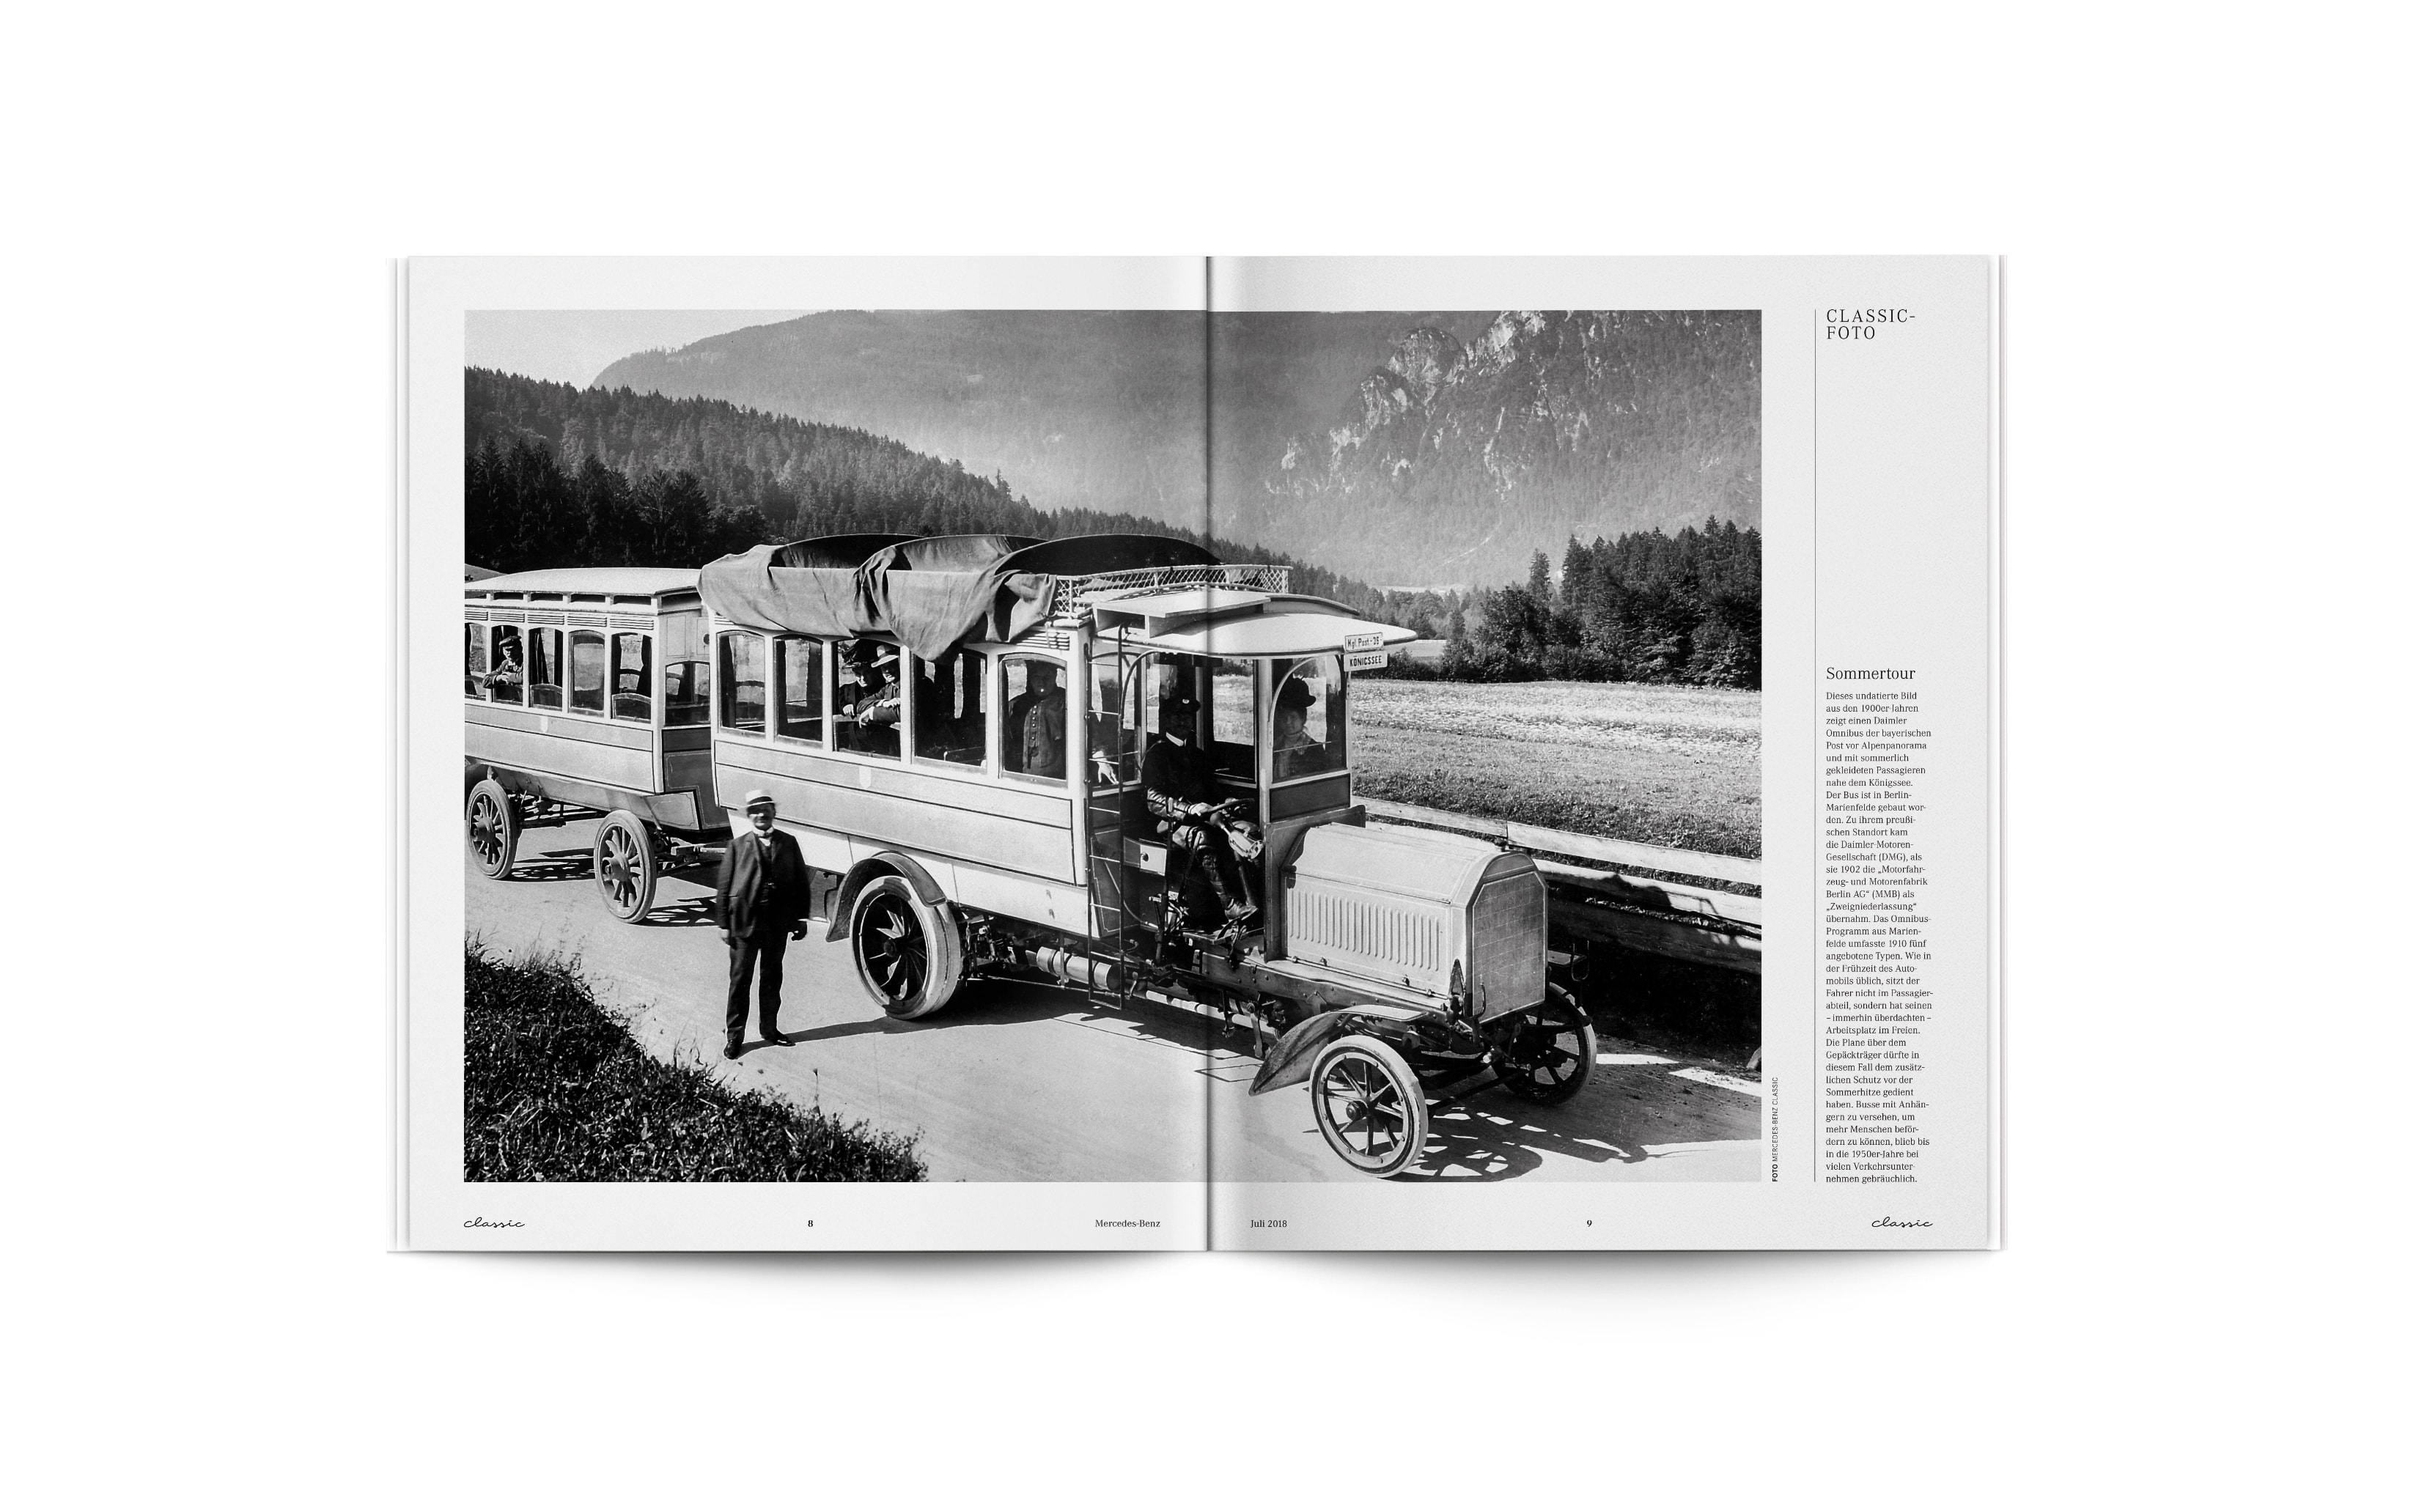 Bureau Johannes Erler – Mercedes-Benz Magazine